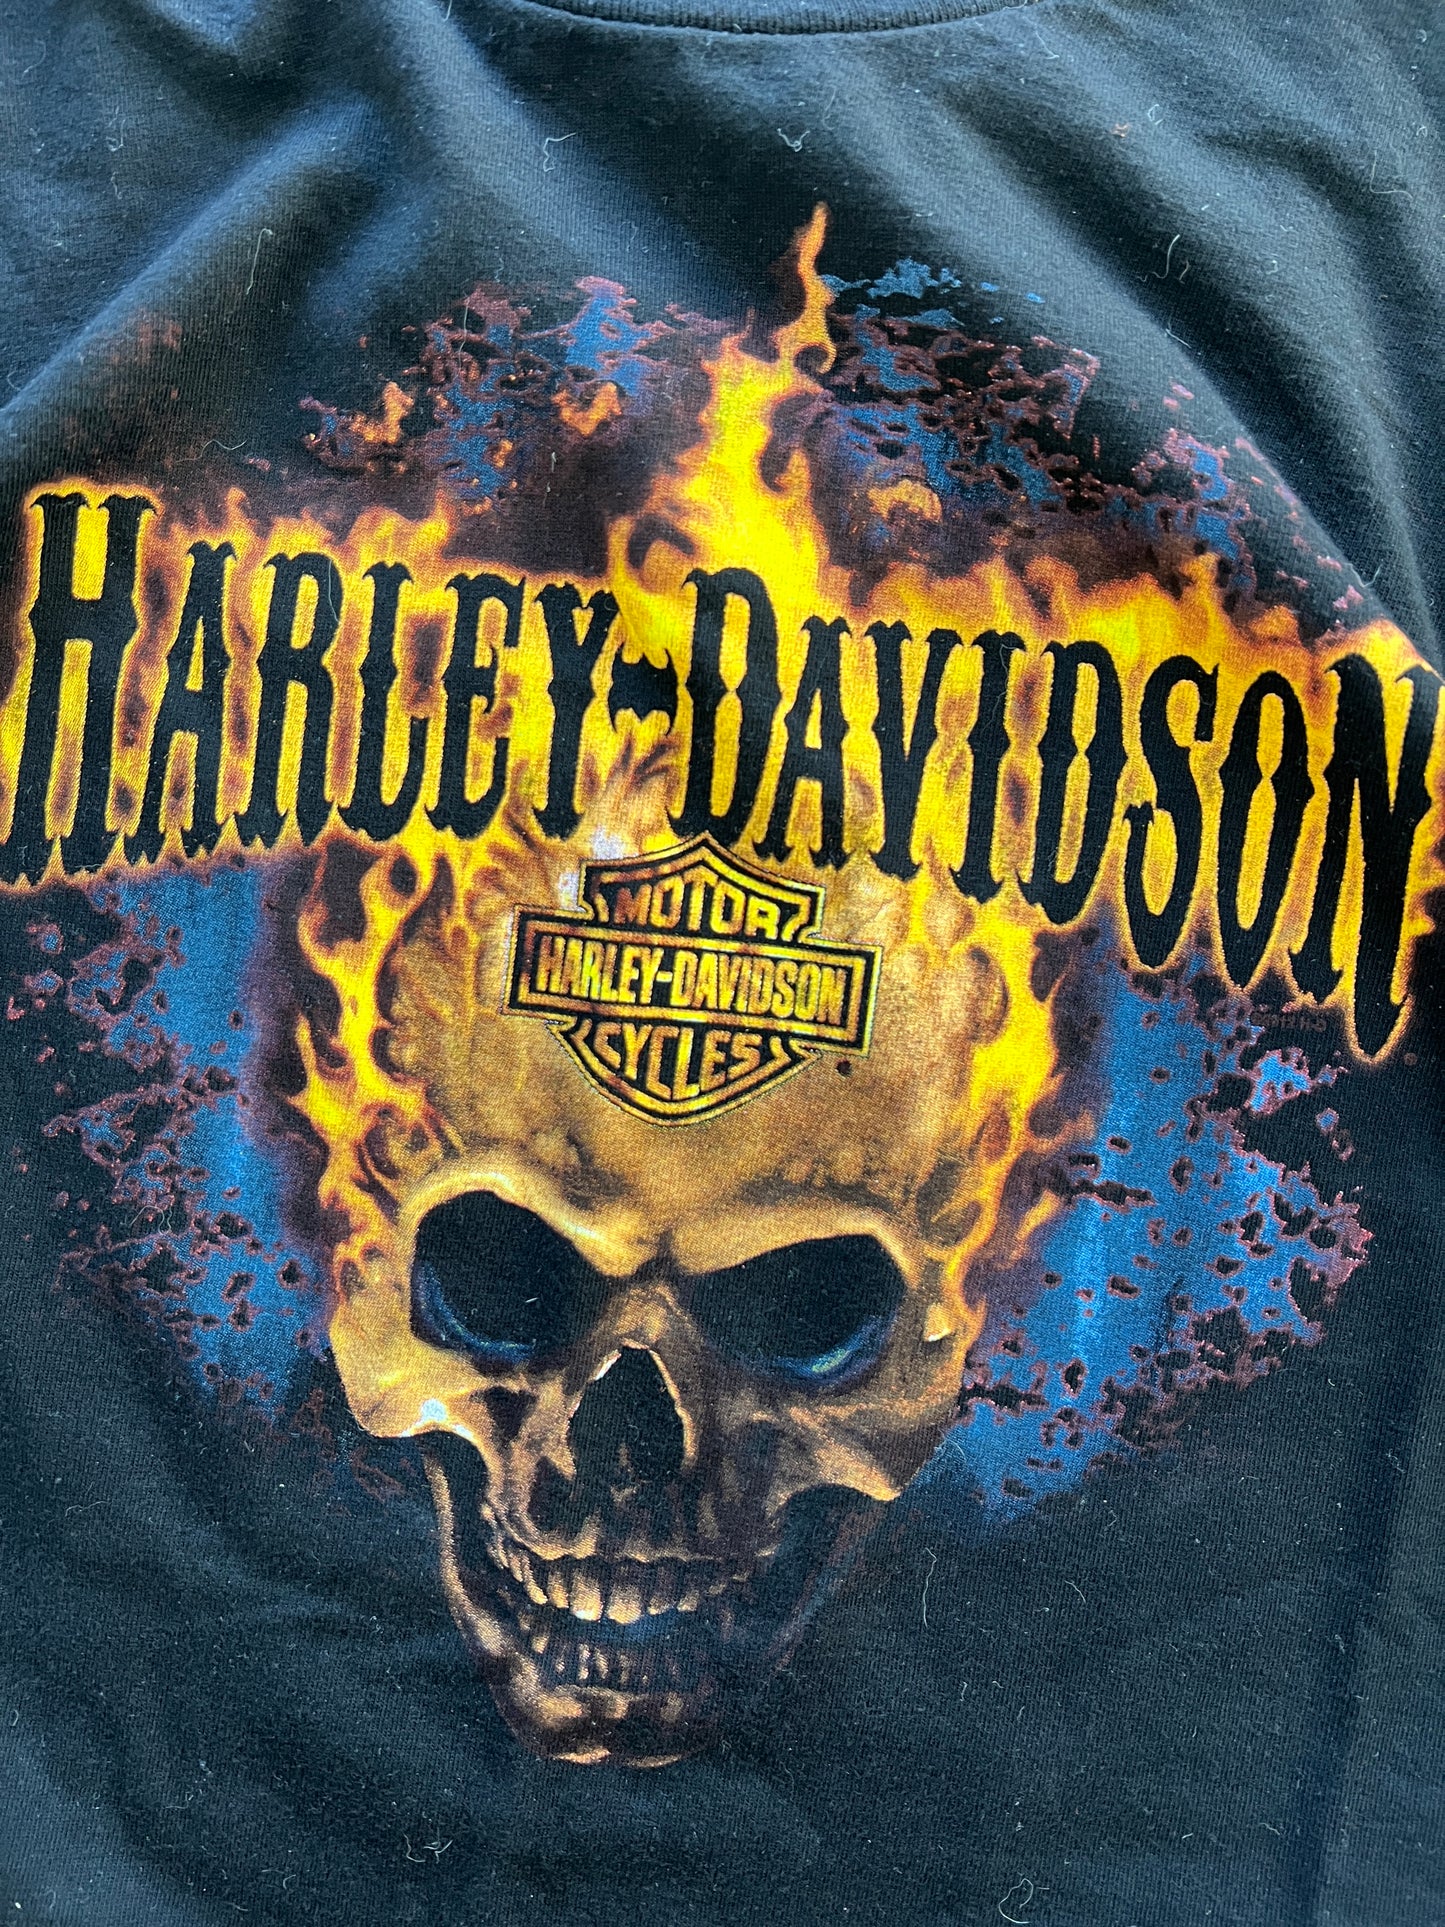 Vintage Harley Davidson Skull Shirt - XL